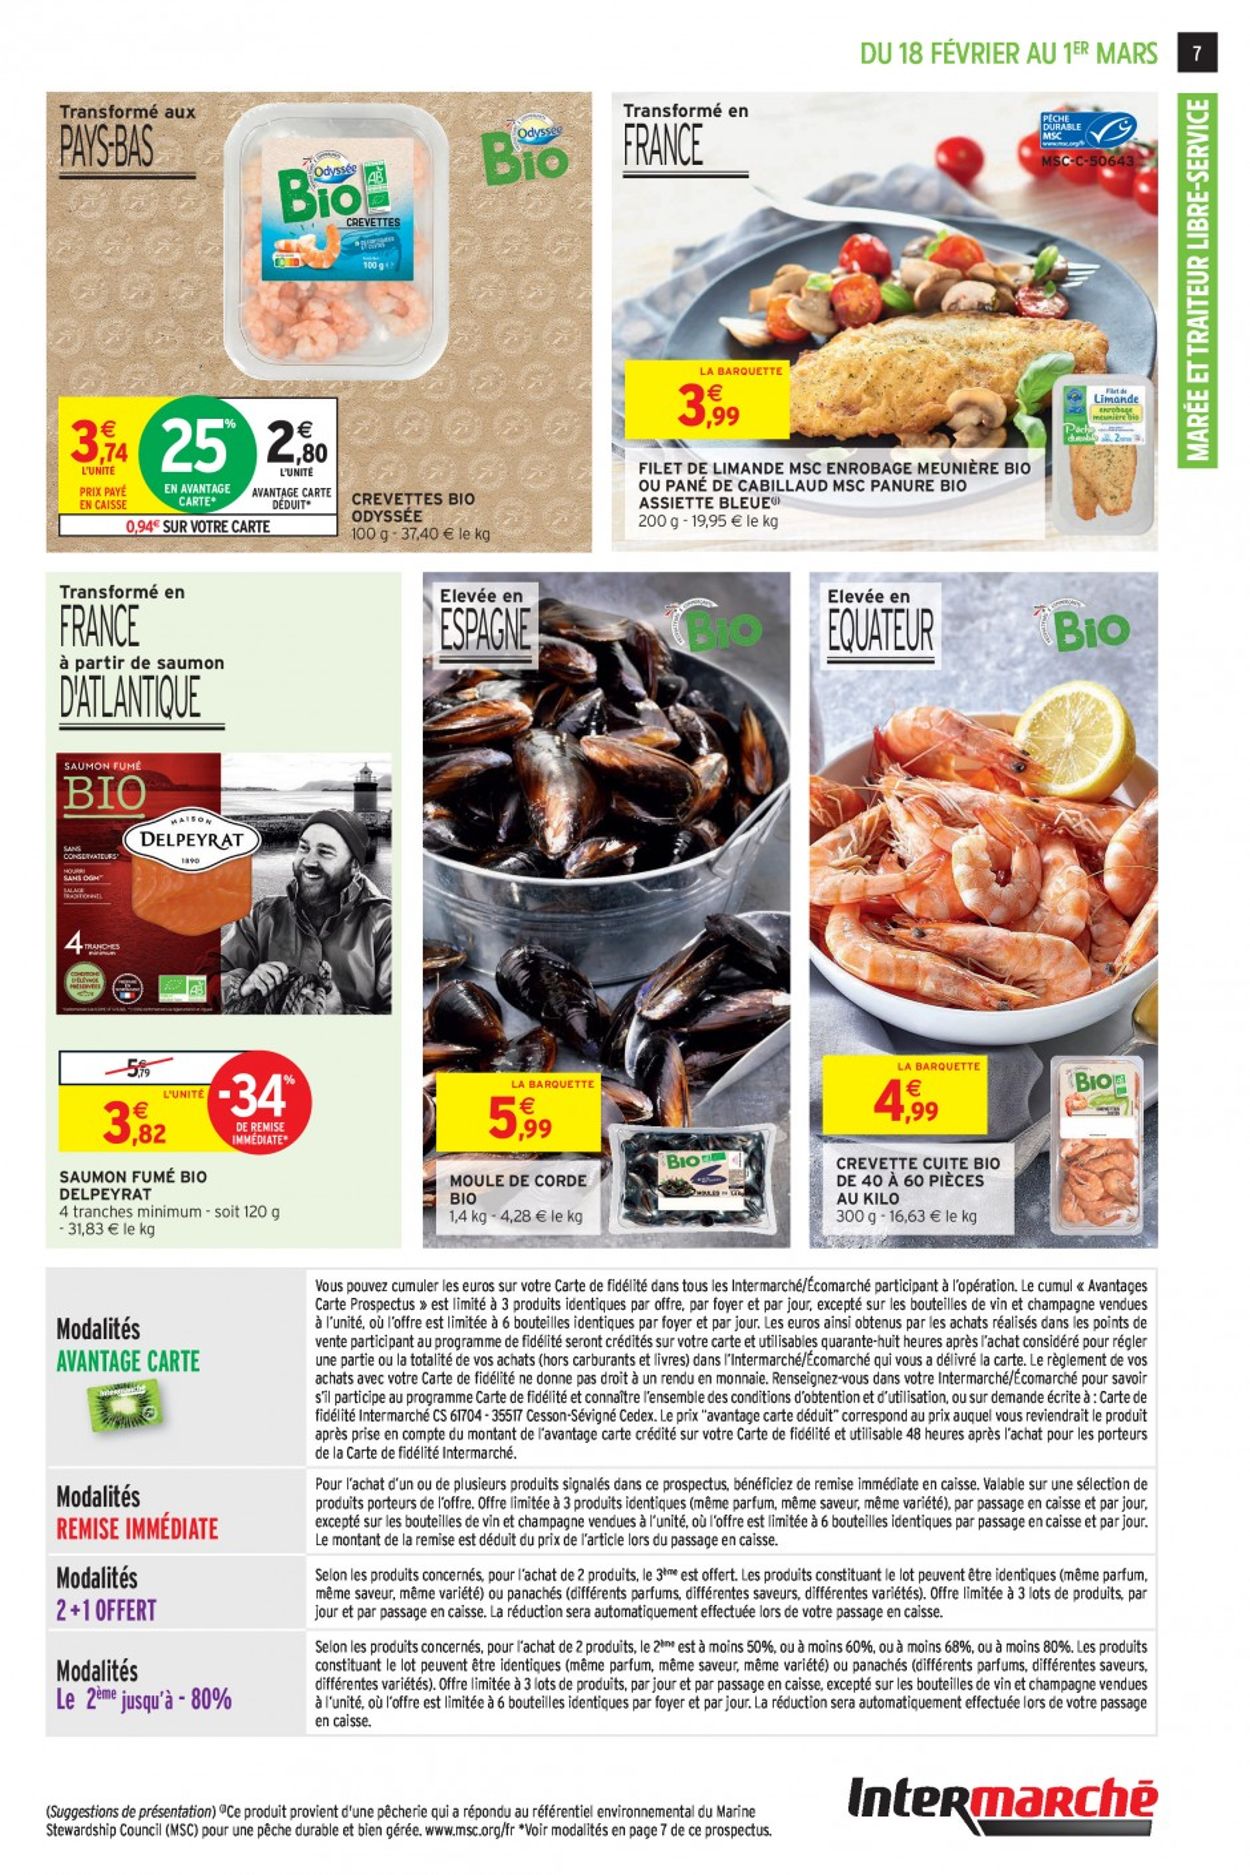 Intermarché Catalogue - 18.02-01.03.2020 (Page 7)